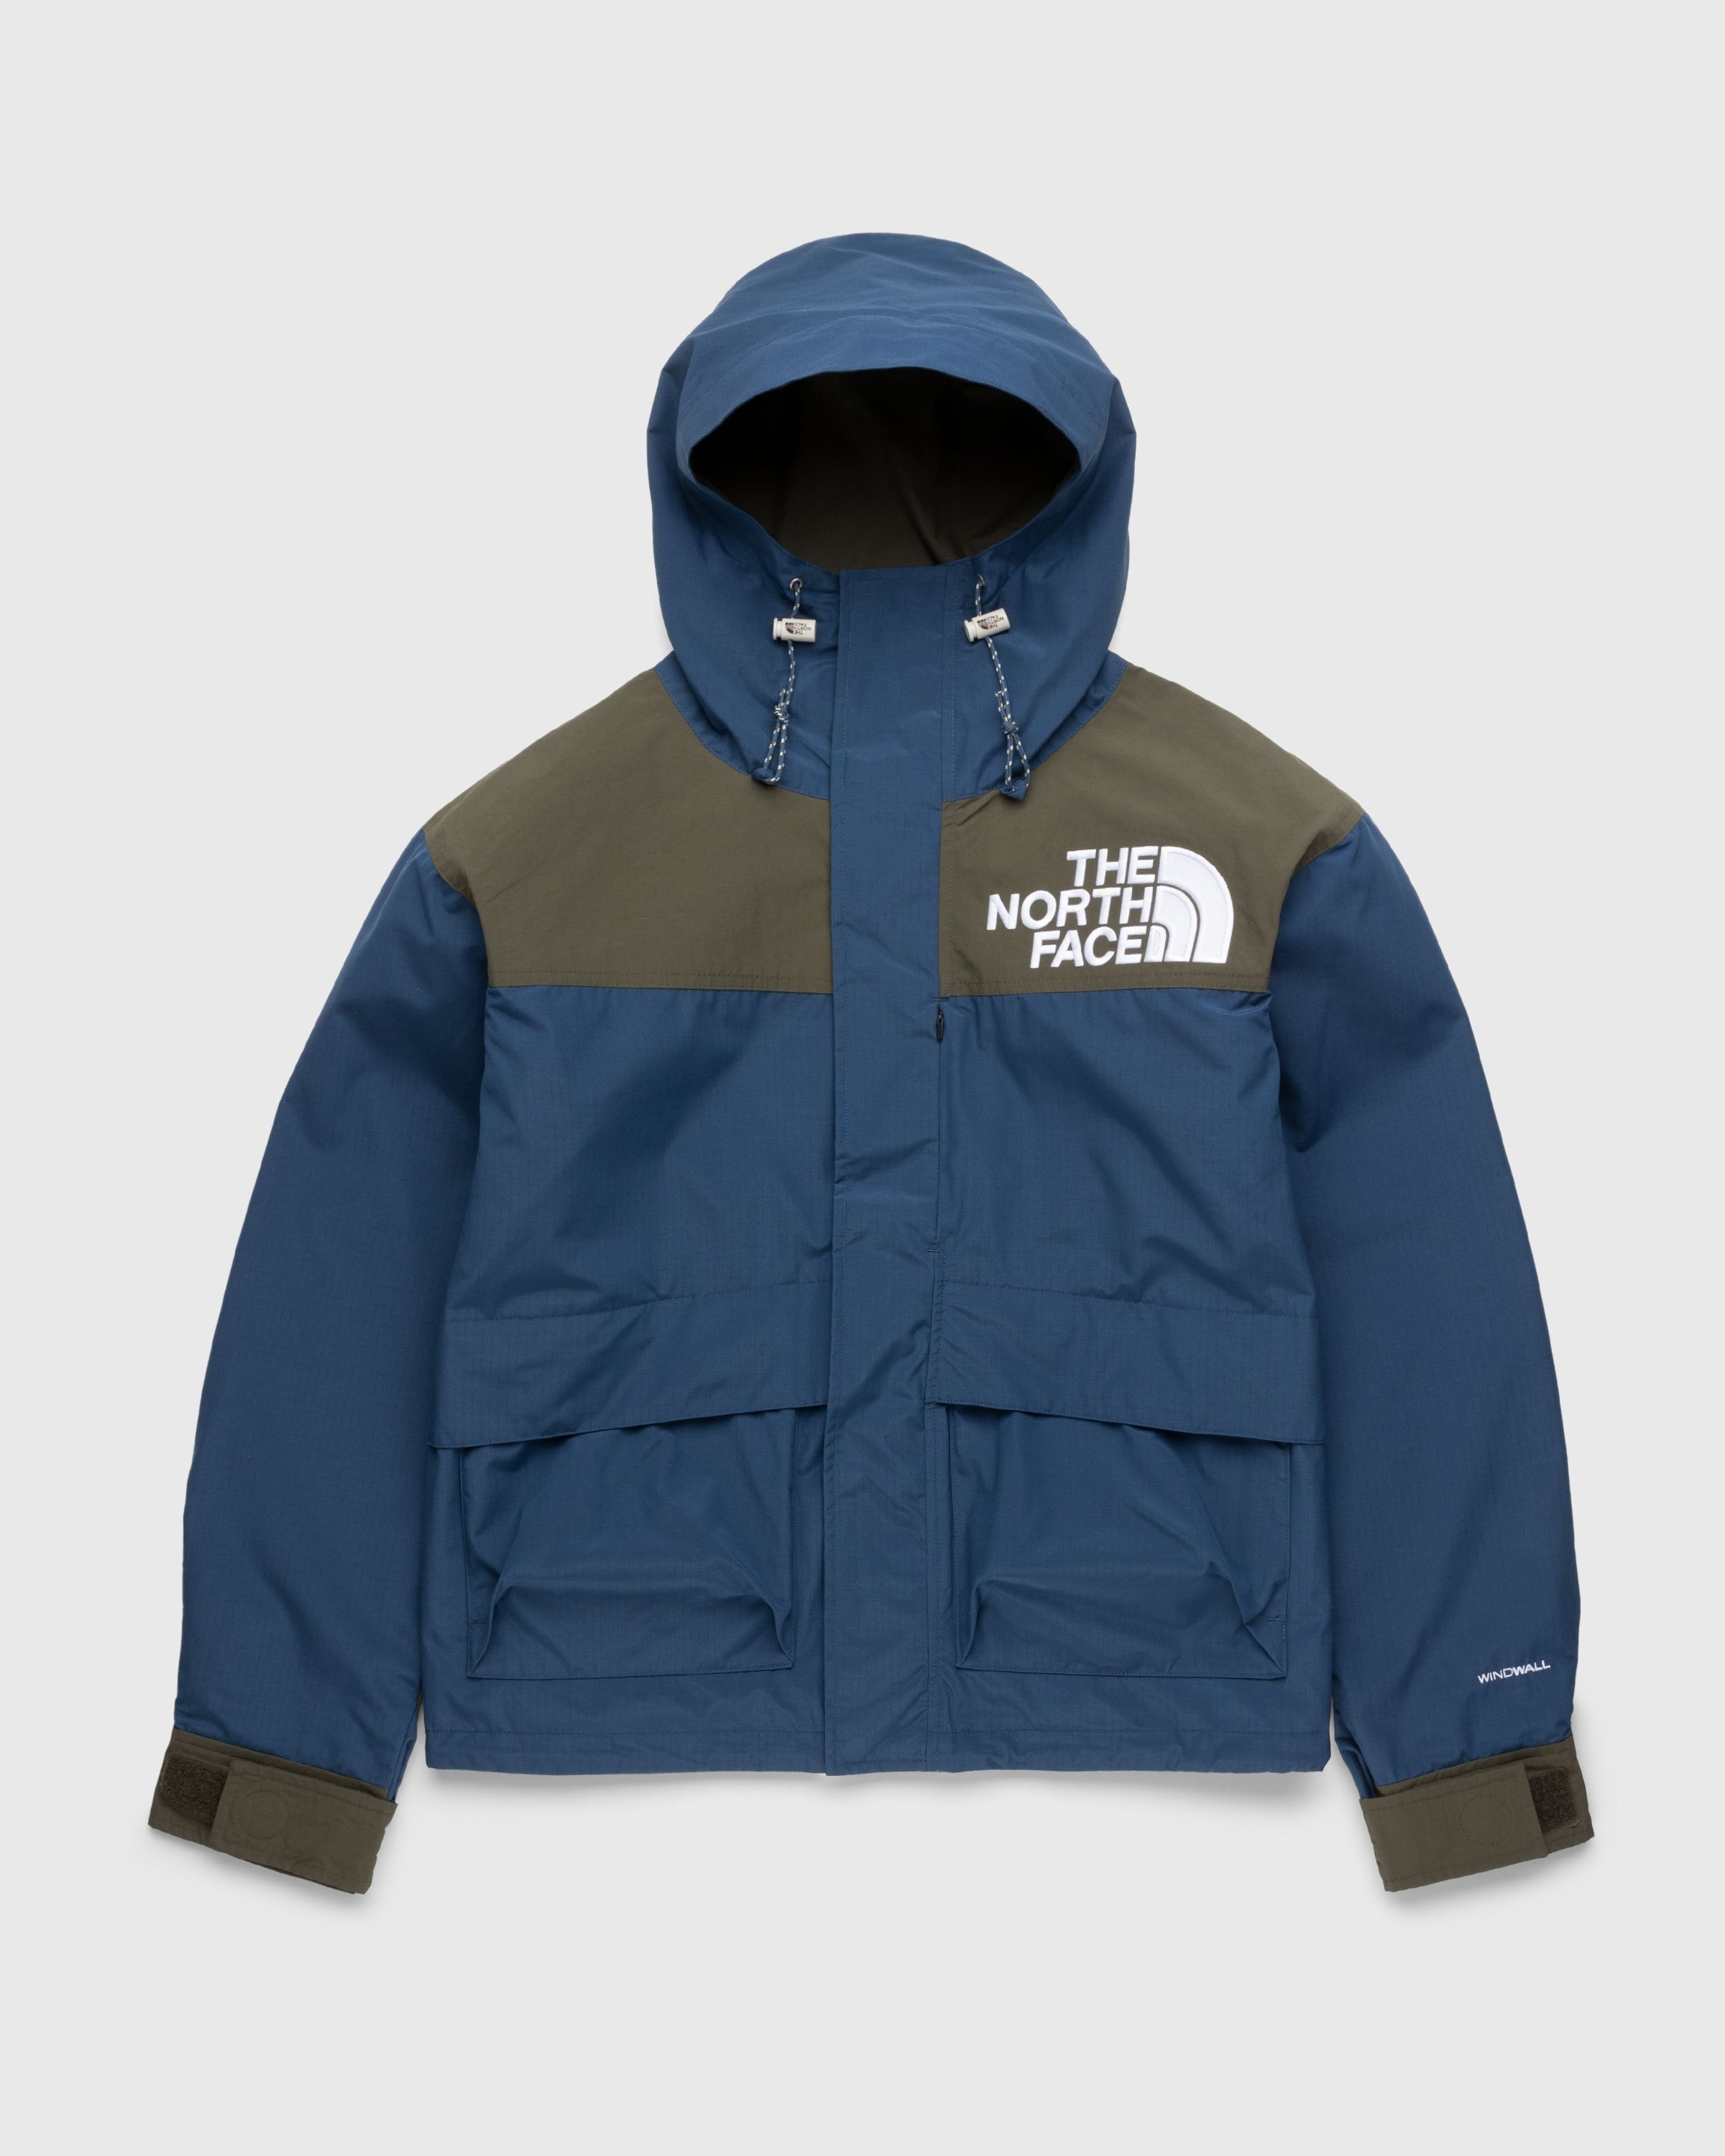 The North Face – '86 Low-Fi Hi-Tek Mountain Jacket Shady Blue/New